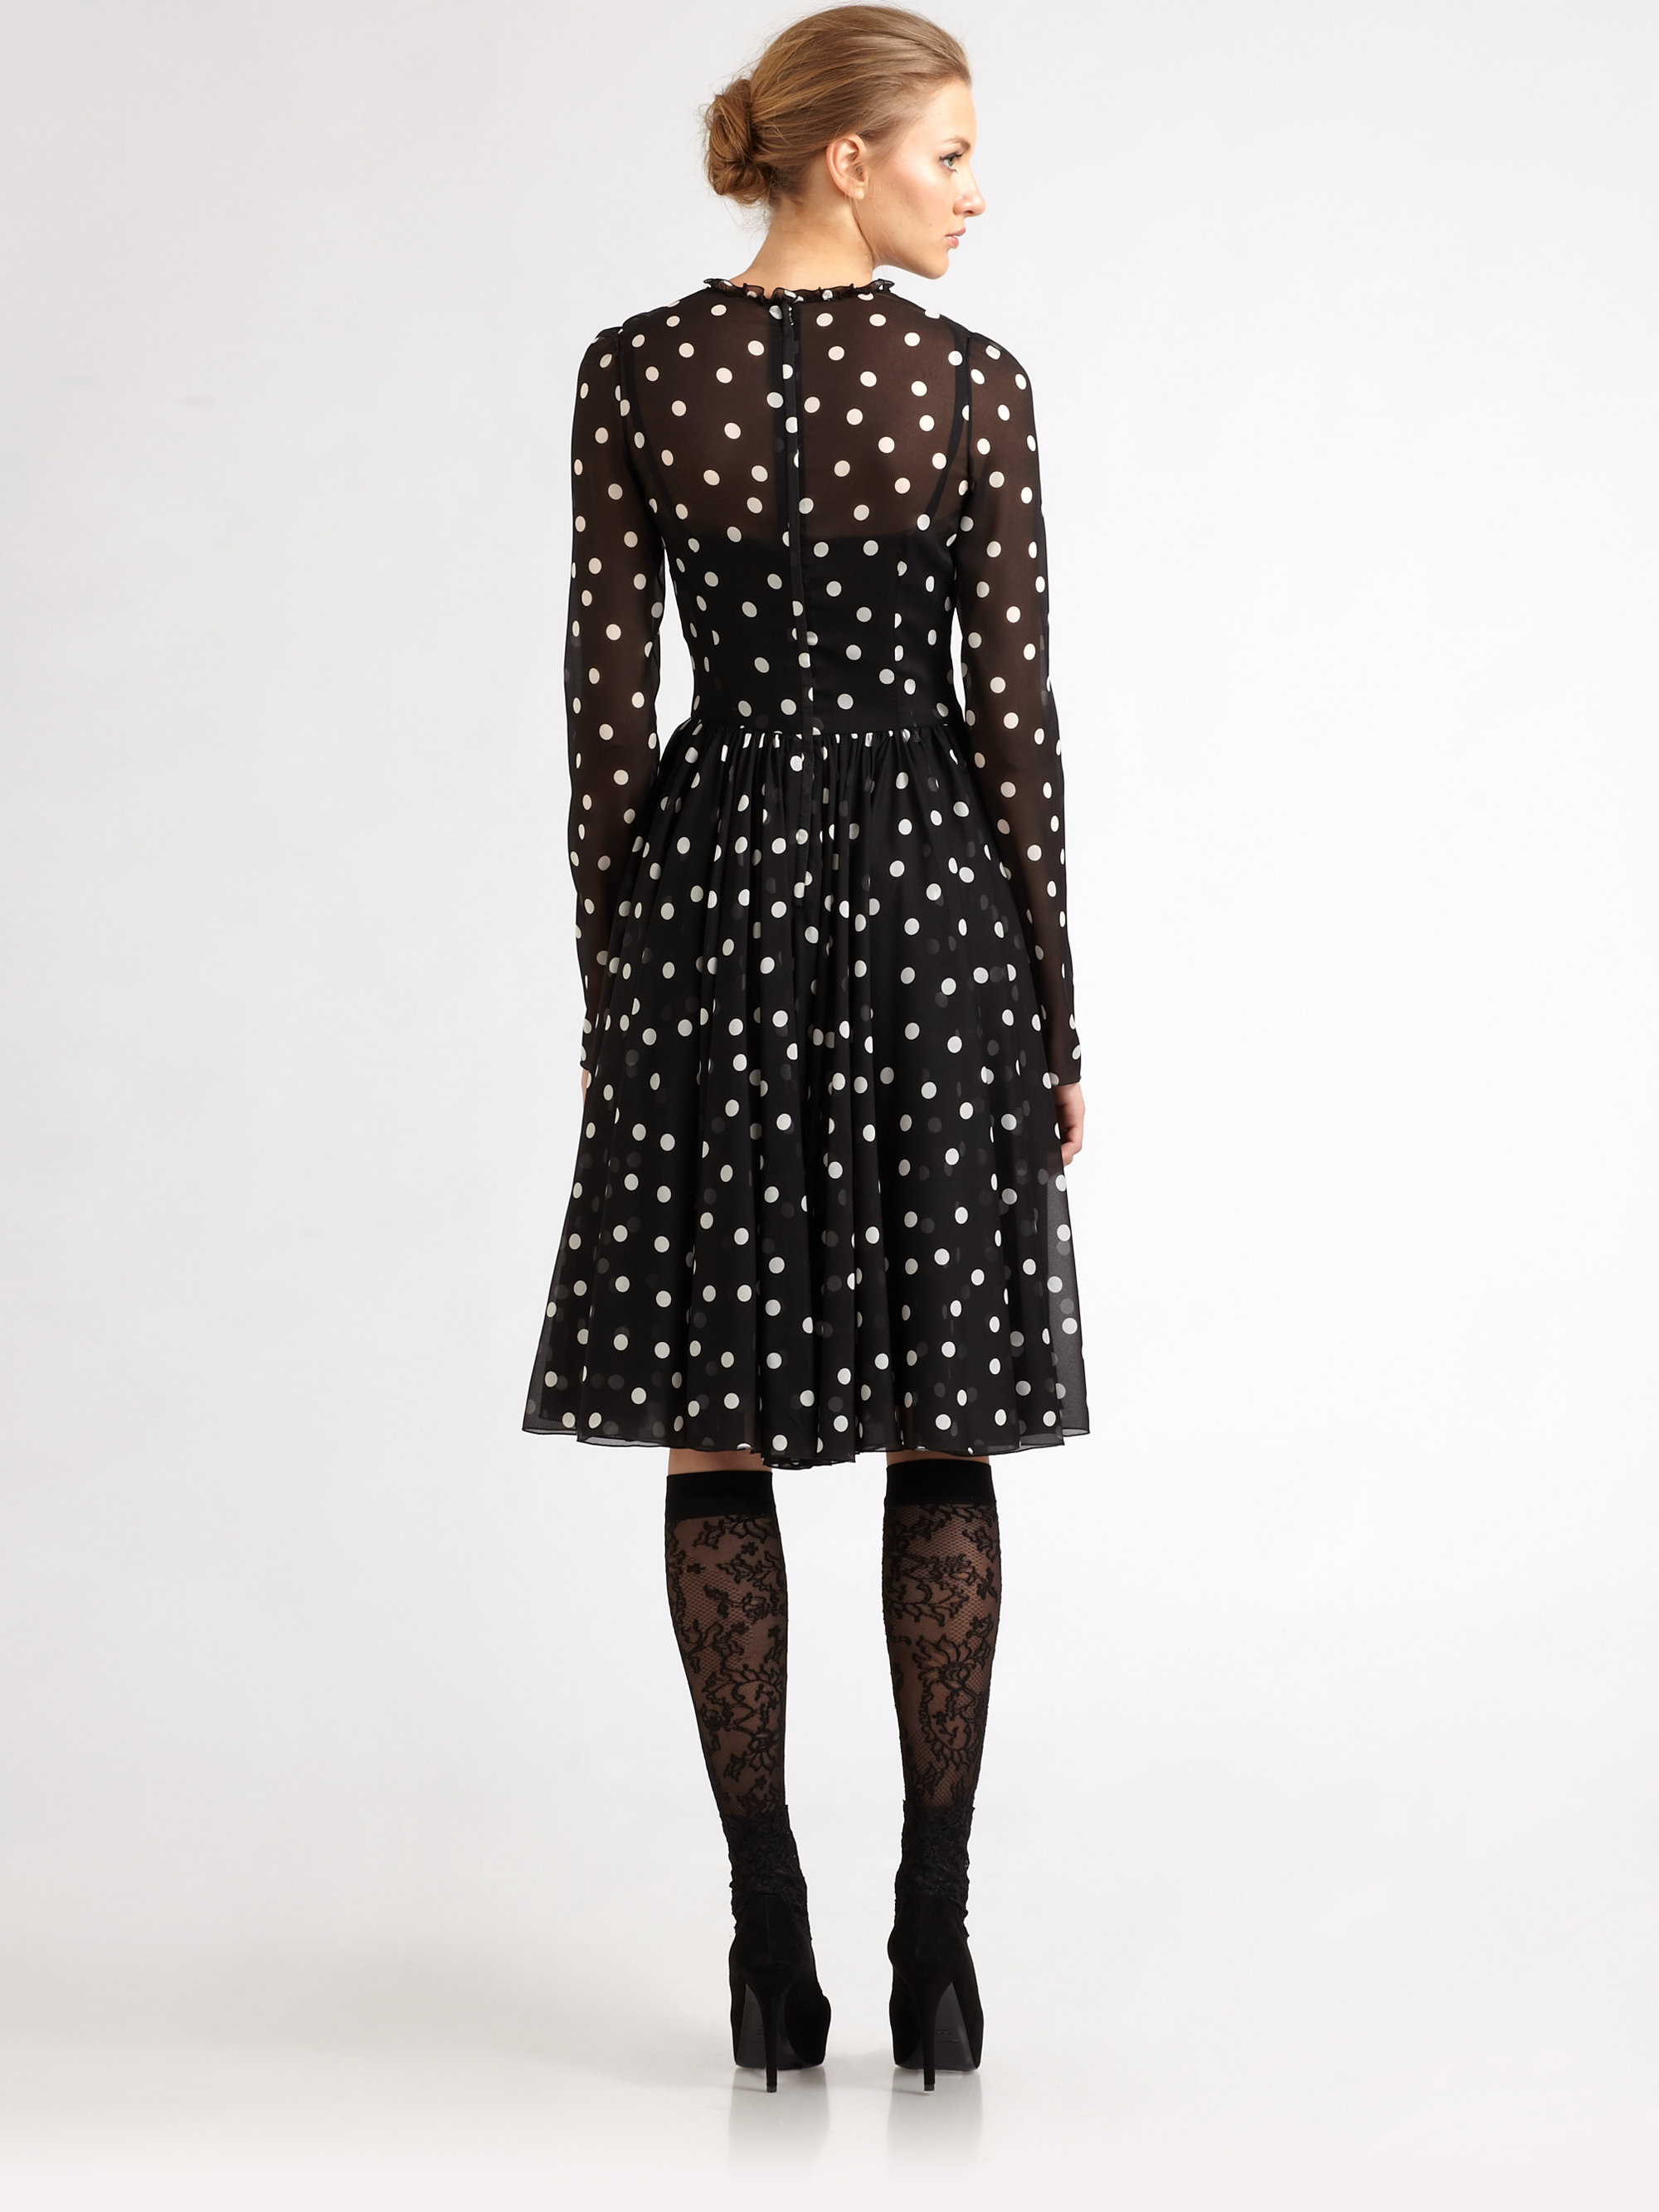 Dolce & Gabbana Silk Polka Dot Dress in Black Print (Black) - Lyst